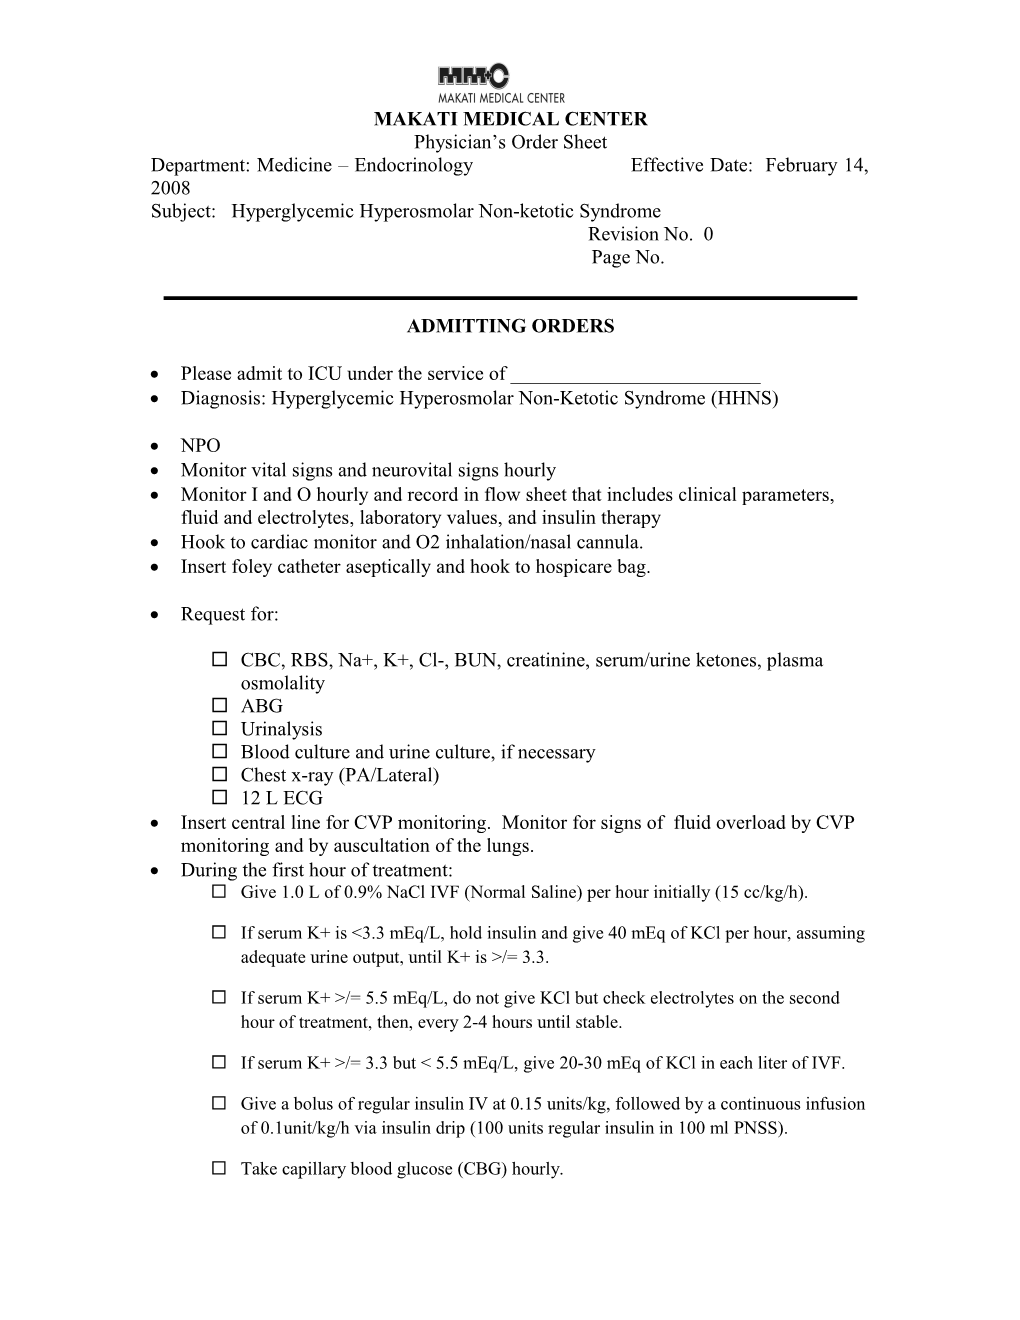 Subject: Hyperglycemic Hyperosmolar Non-Ketotic Syndrome